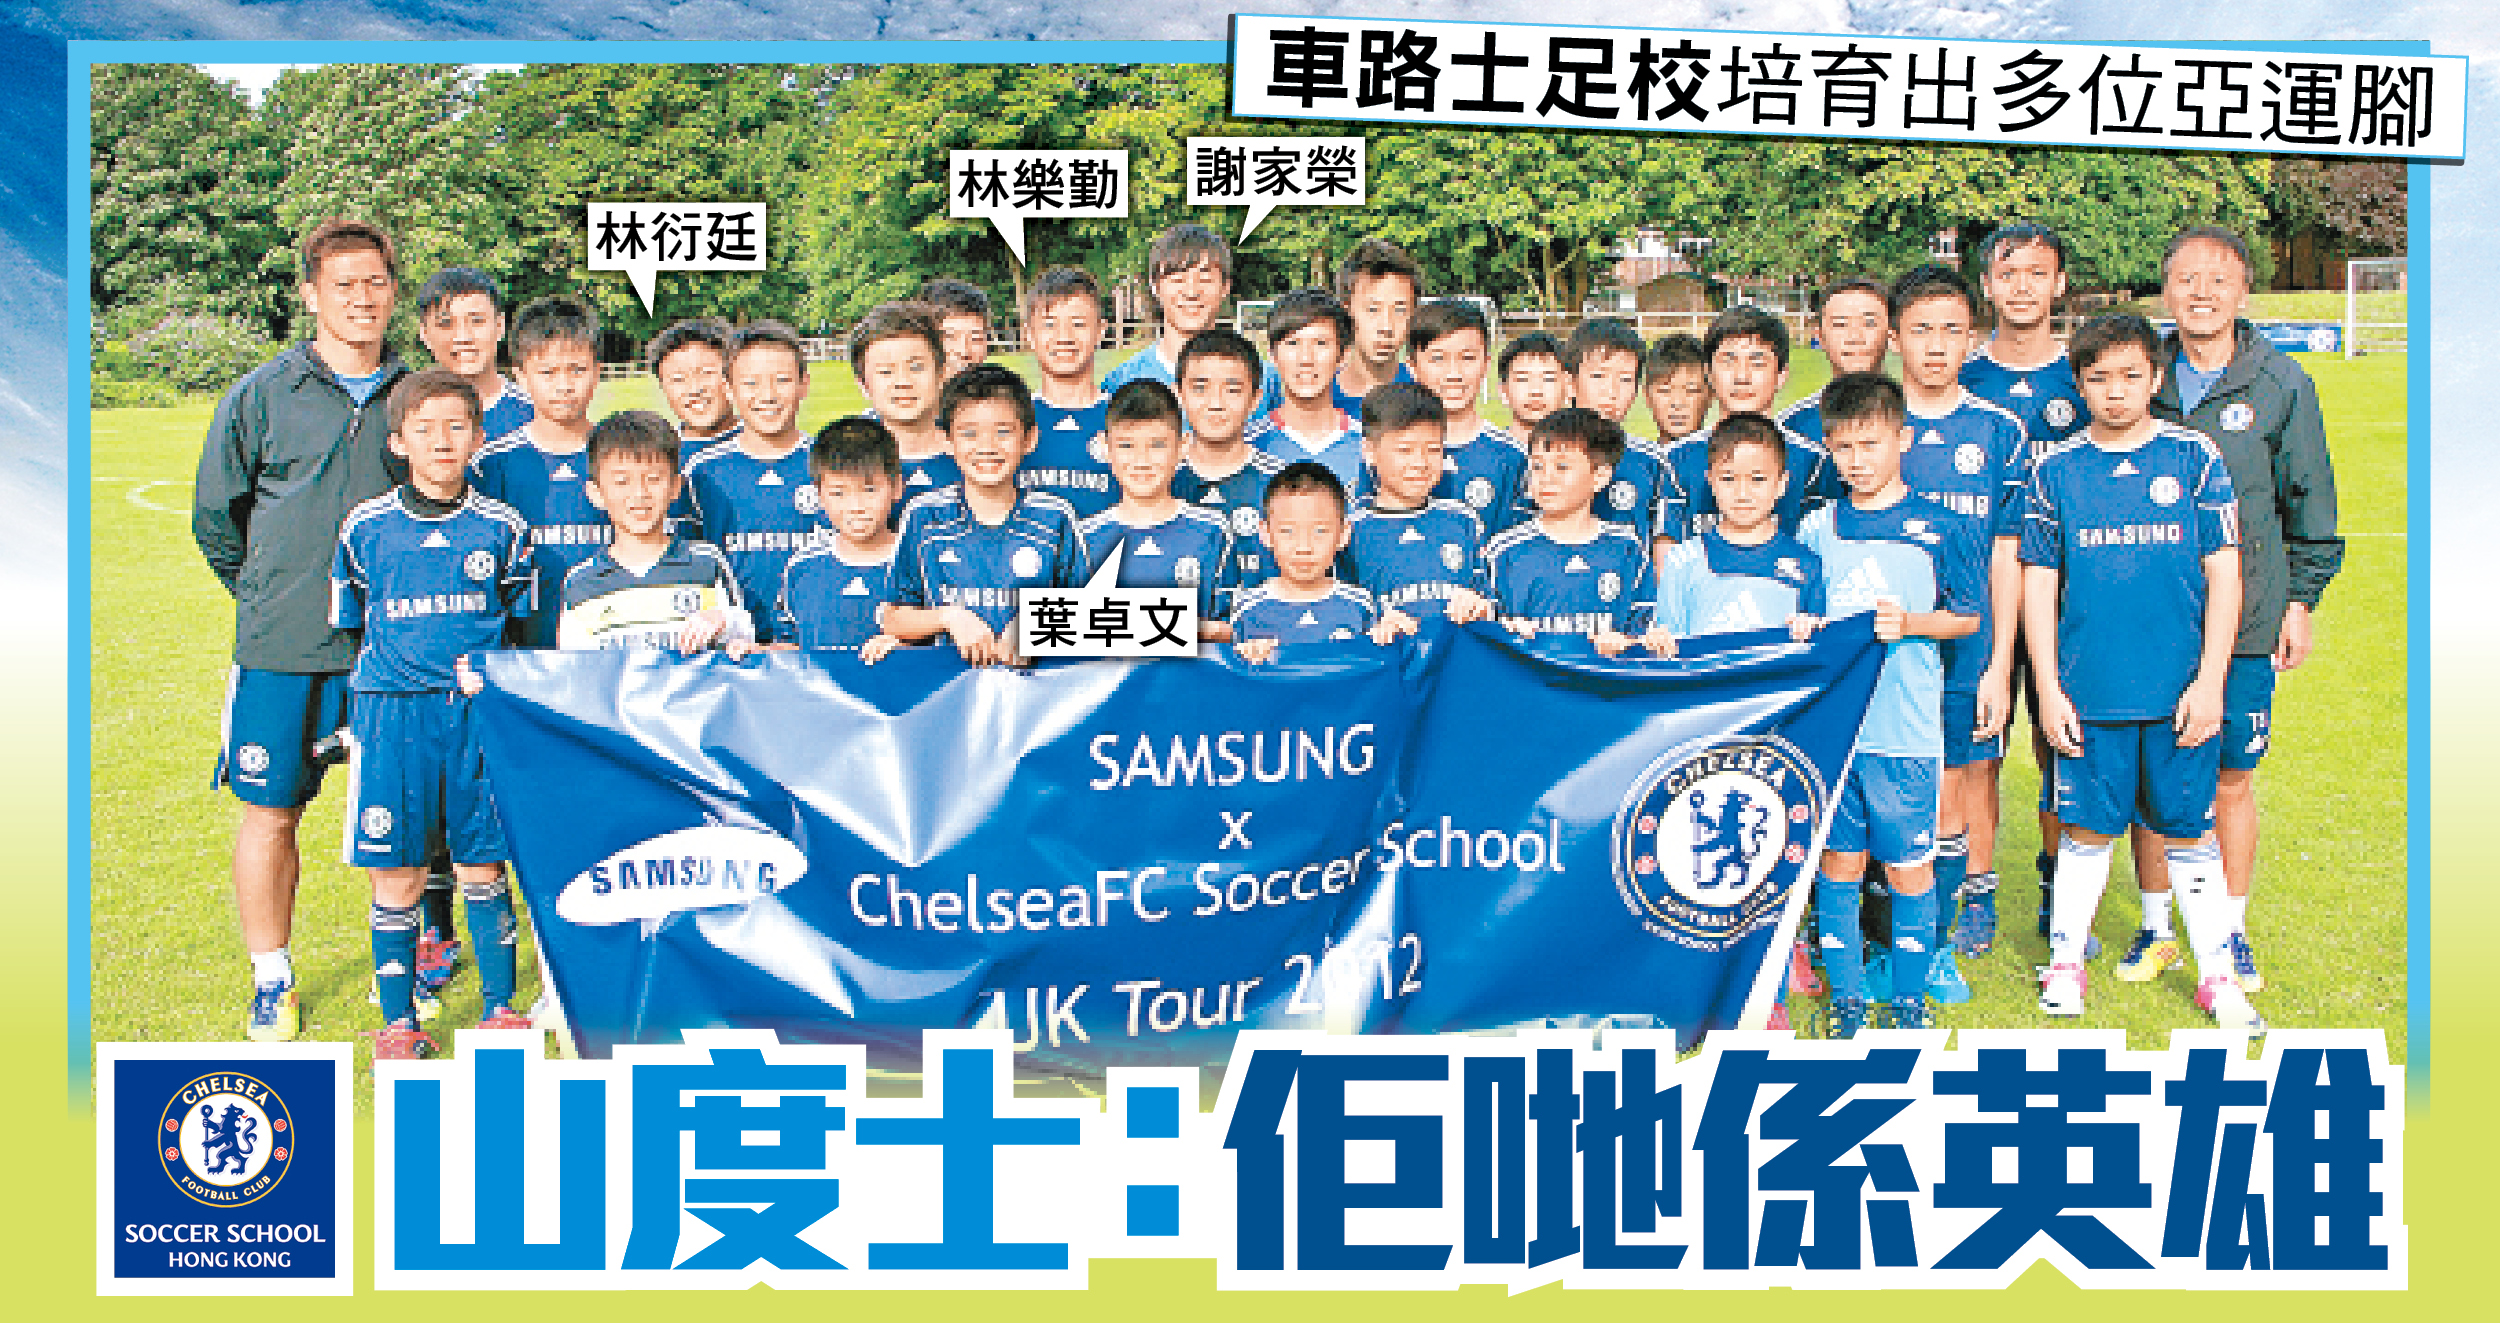 Chelsea Football School (Hong Kong): Cultivating Champions and Making History